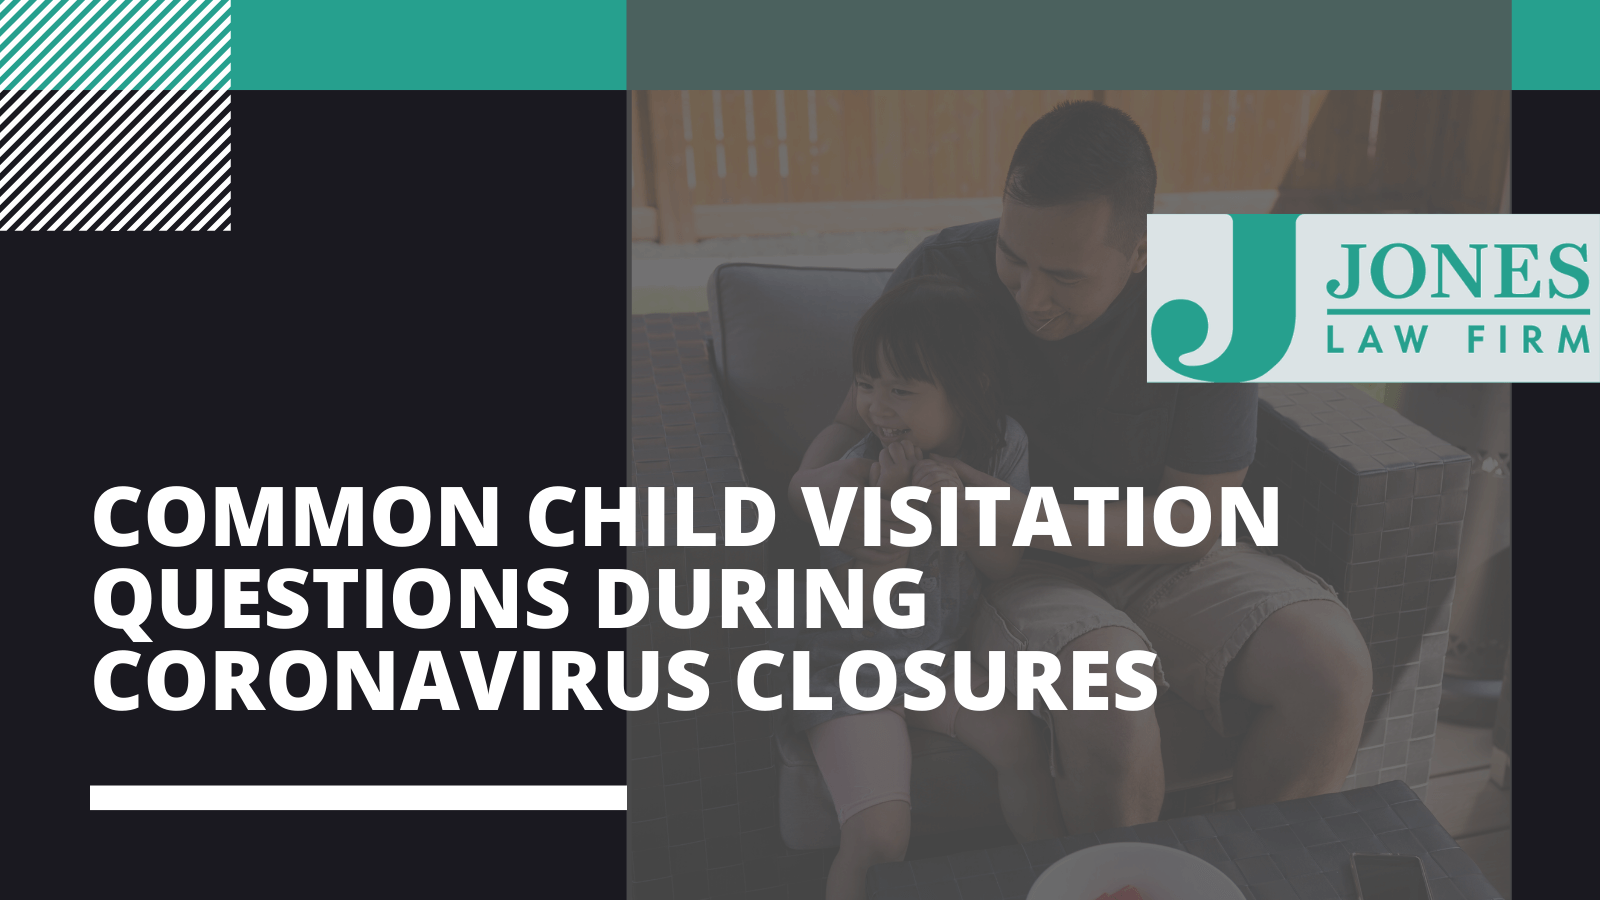 Common child visitation questions during Coronavirus closures in Louisiana - Jones law firm - Alexandria louisiana